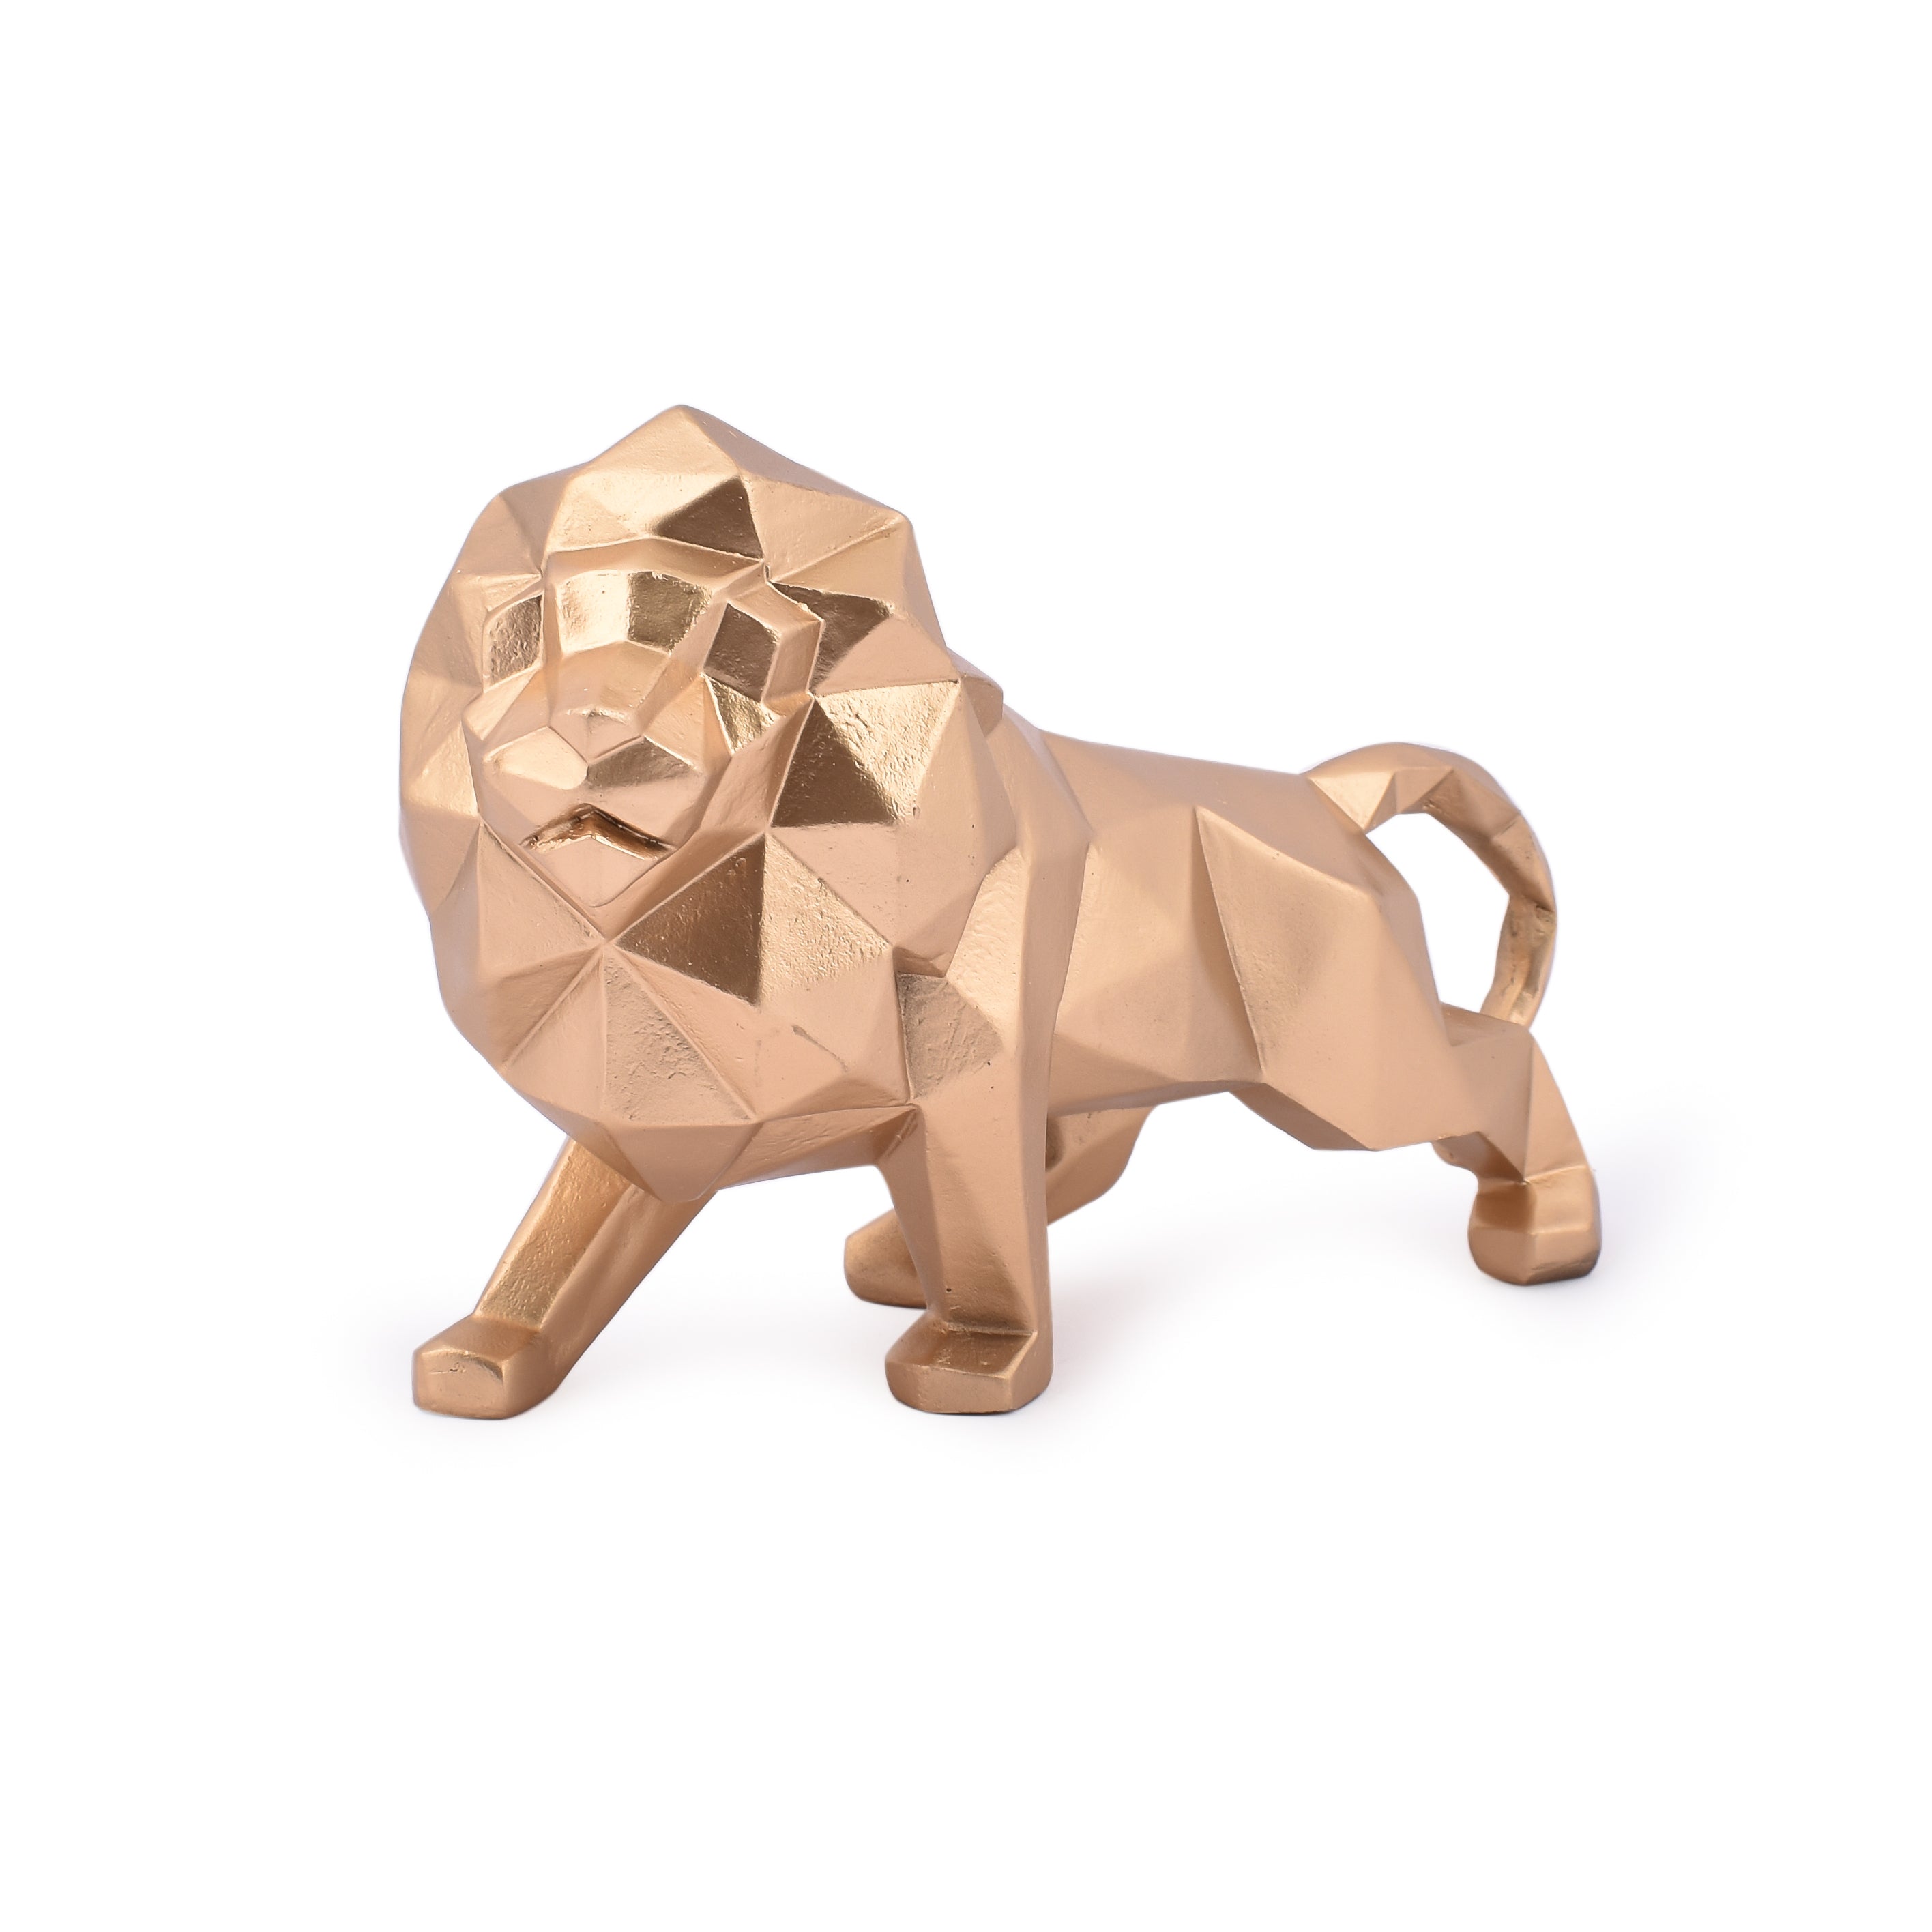 Geometric Animal Showpiece Of Golden Lion